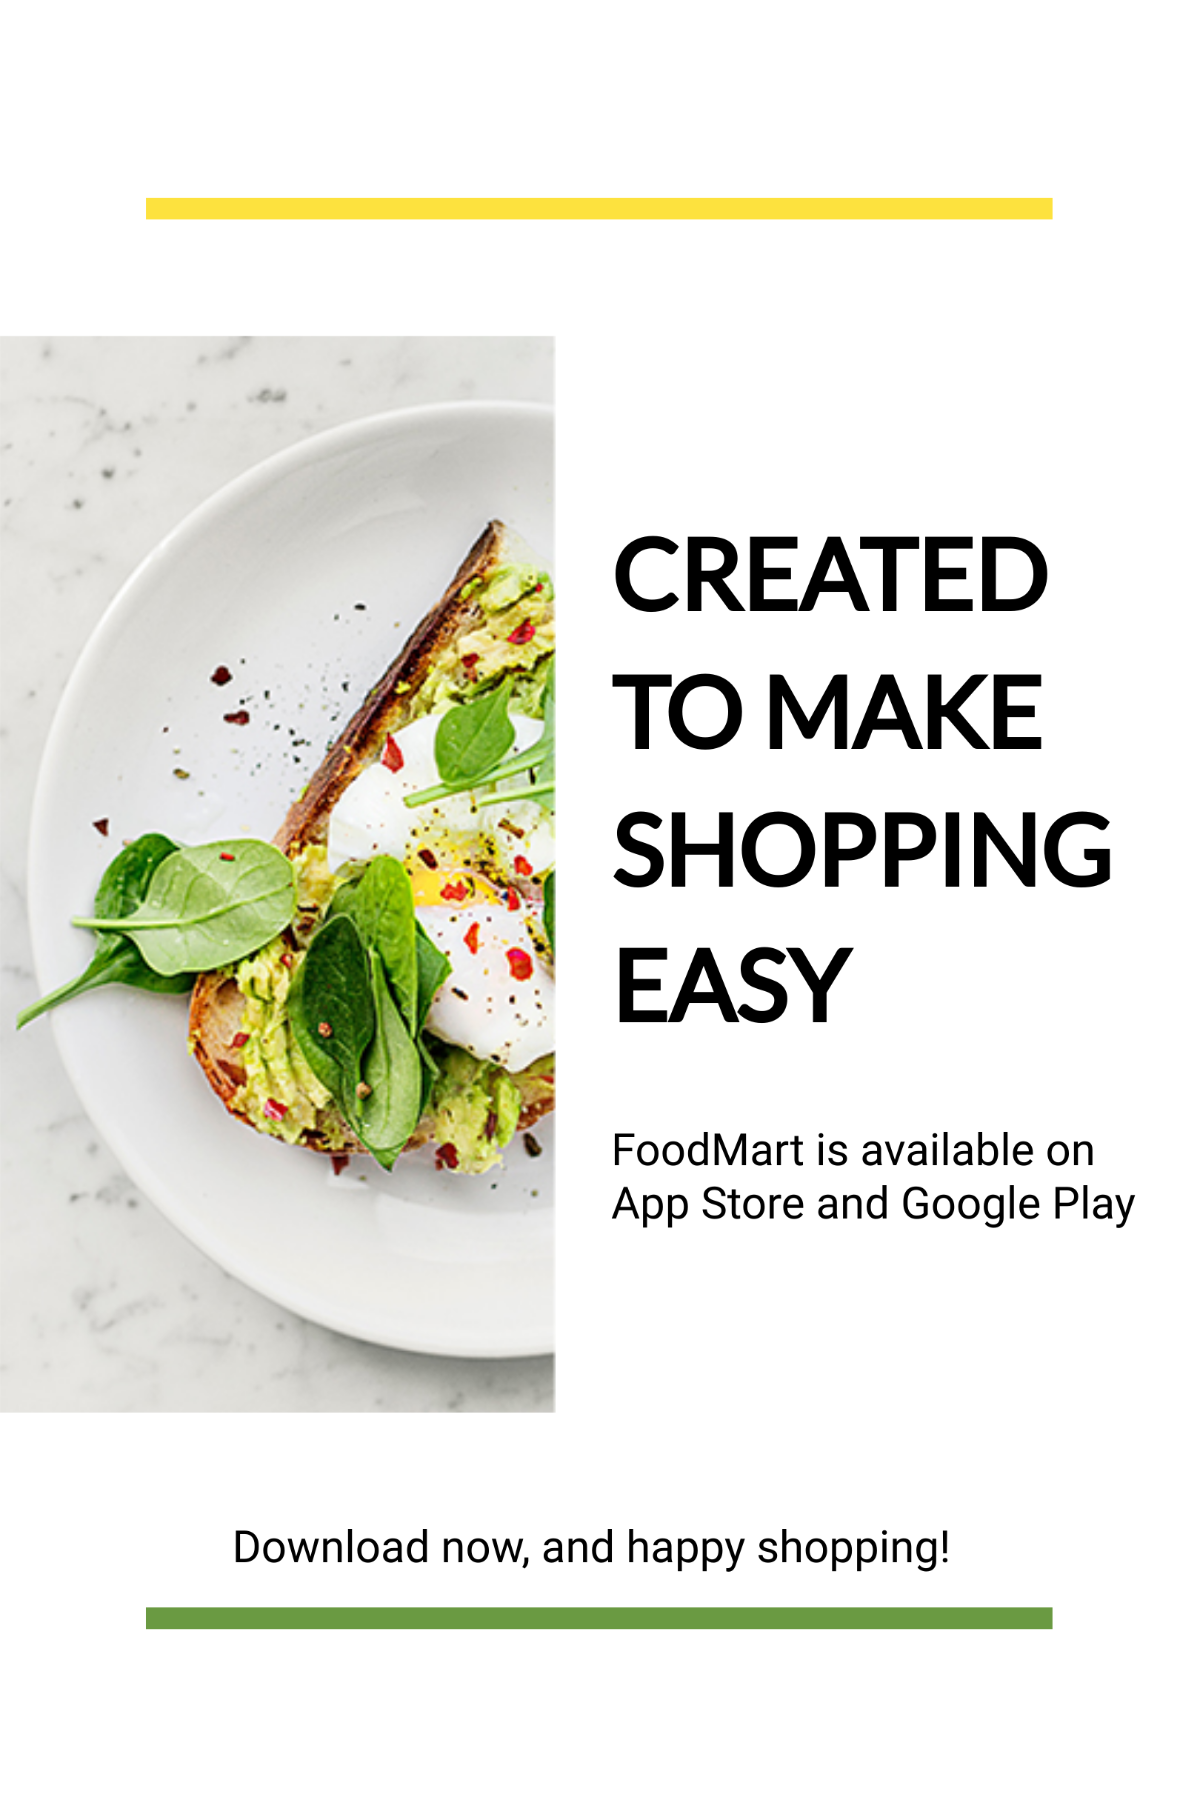 Food Market App Promotion Tumblr Post Template